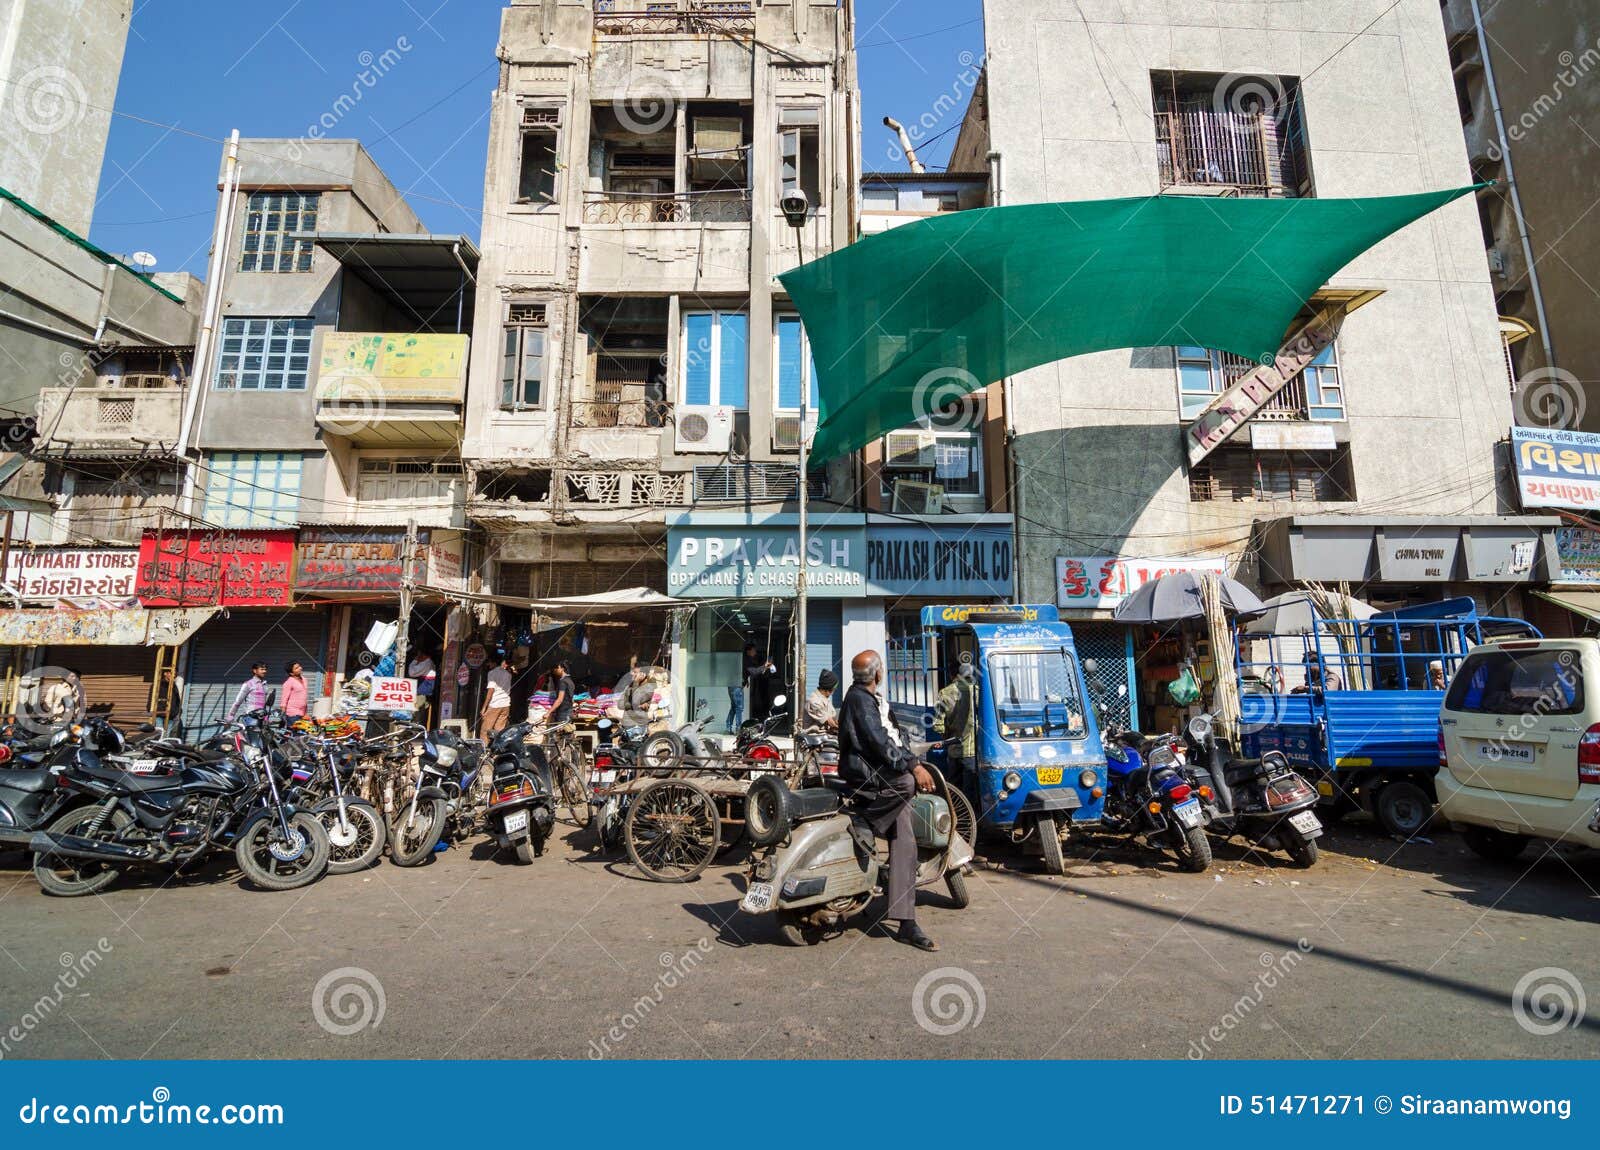 Ahmedabad, India - December 28, 2014: Indian People on Street of